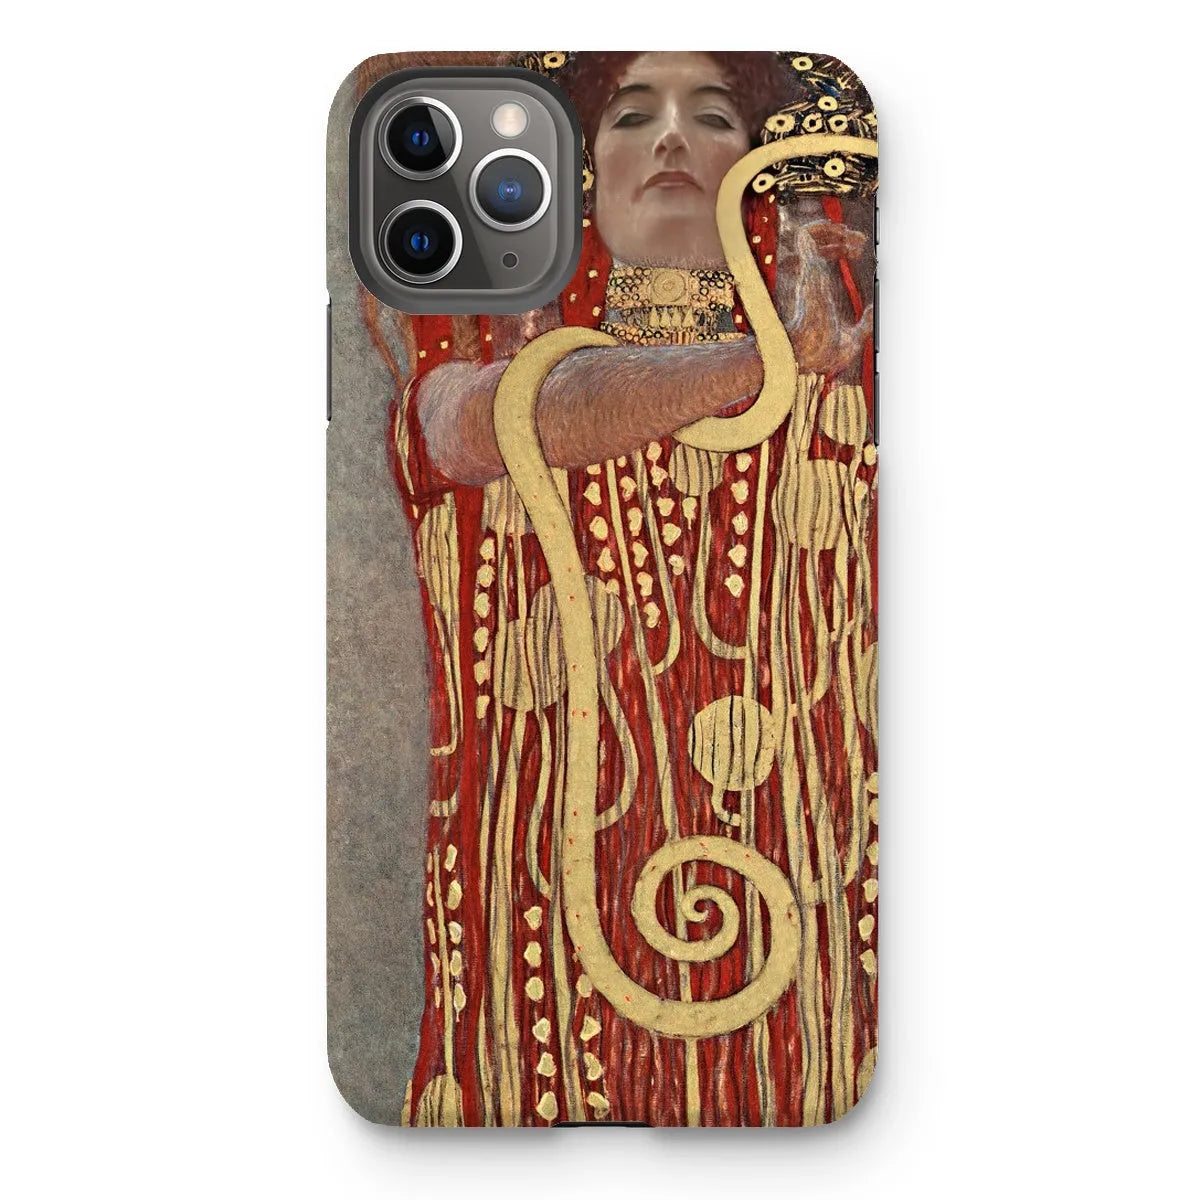 Hygieia - Vienna Succession Phone Case - Gustav Klimt - Iphone 11 Pro Max / Matte - Mobile Phone Cases - Aesthetic Art